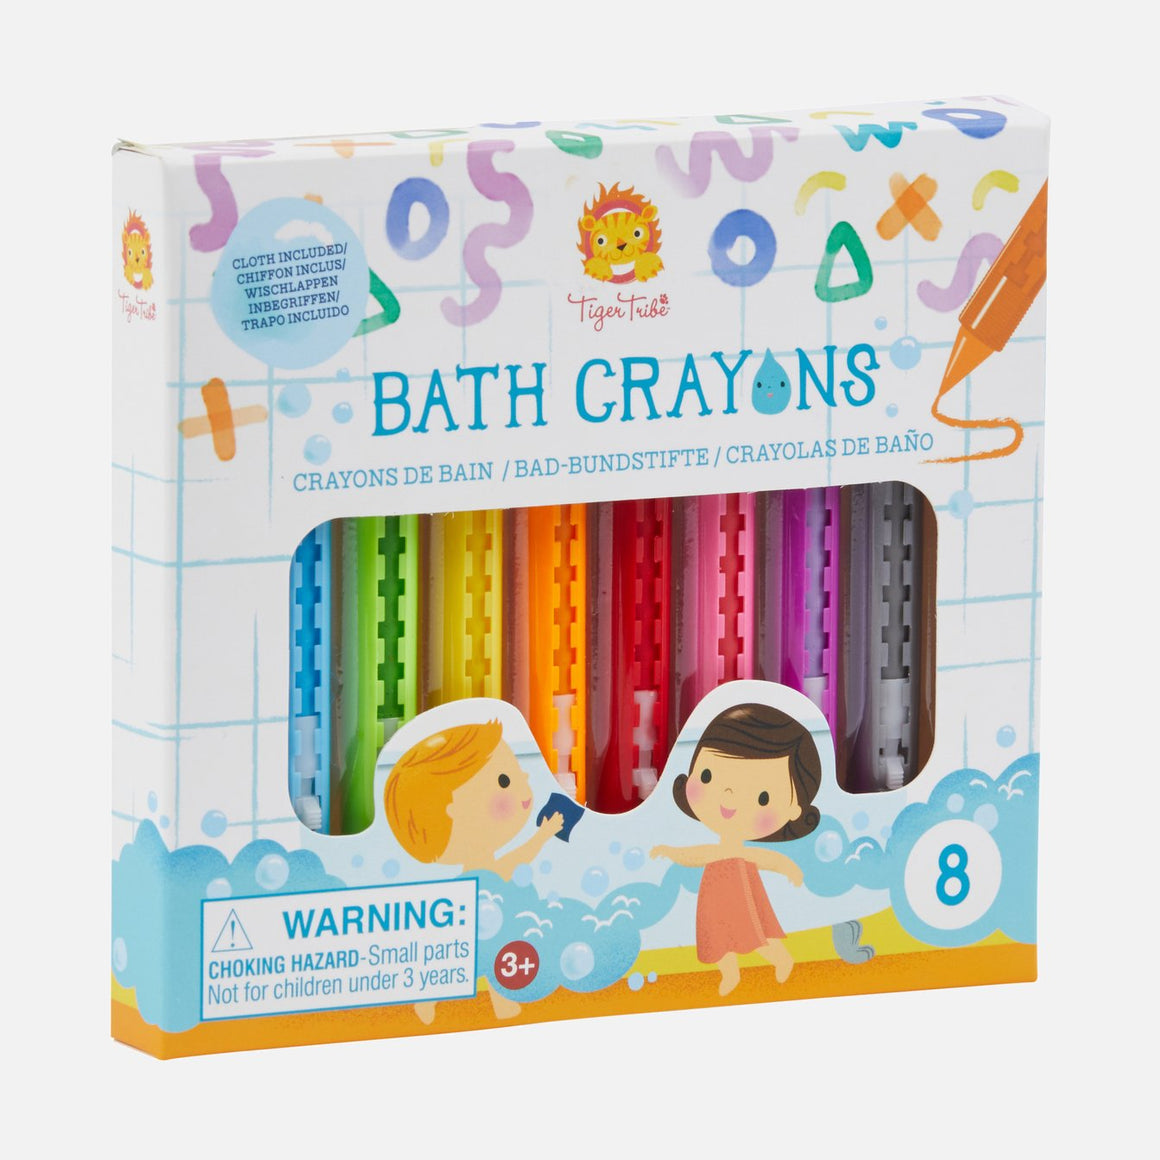 Colourful bath crayons